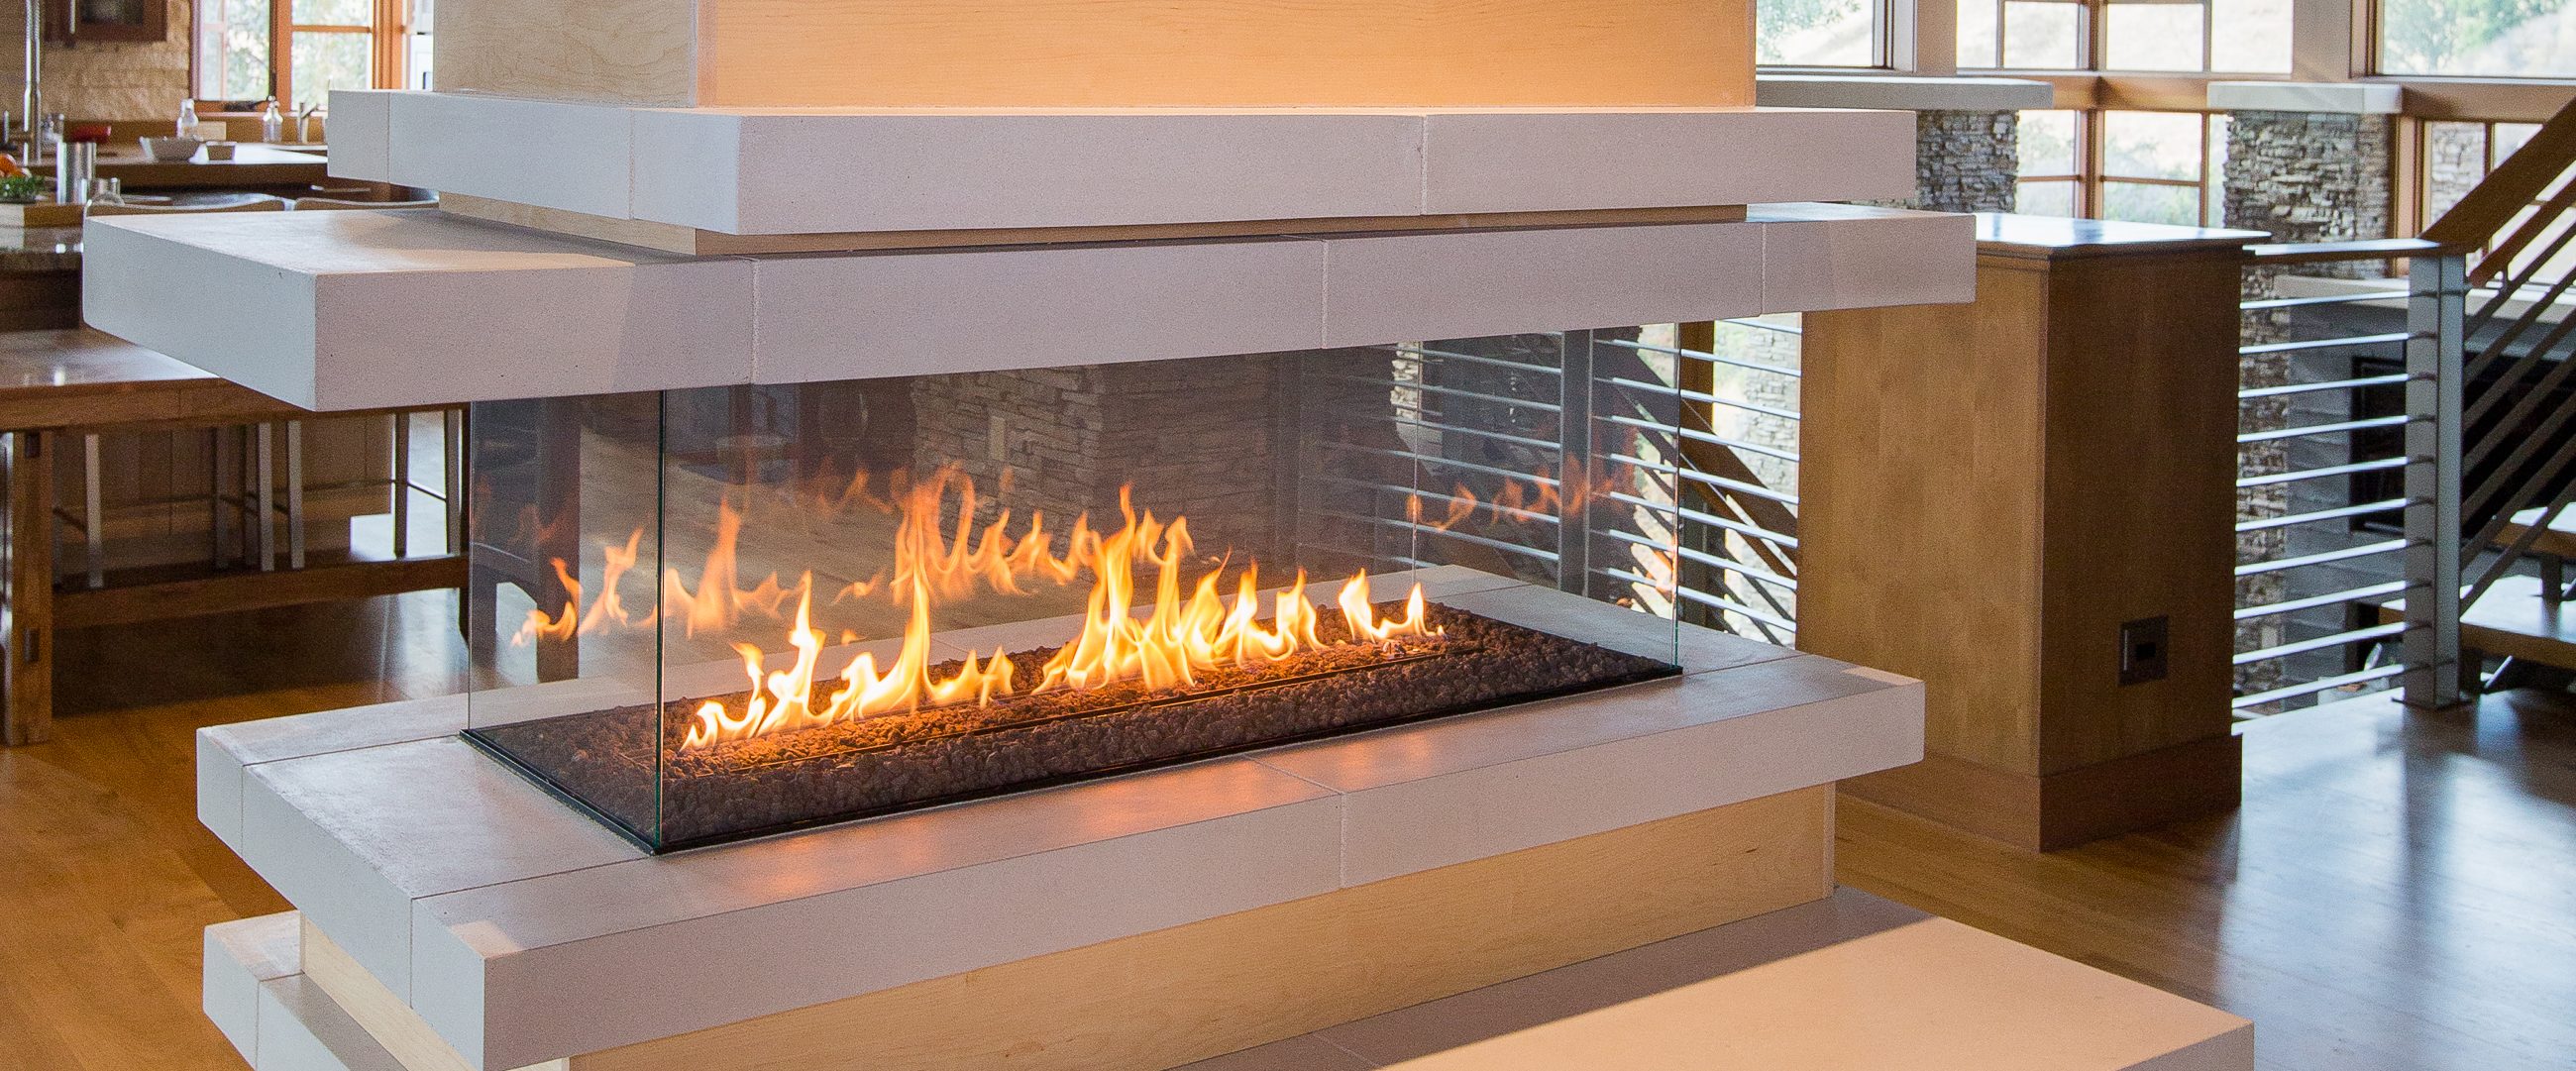 four-sided custom fireplace